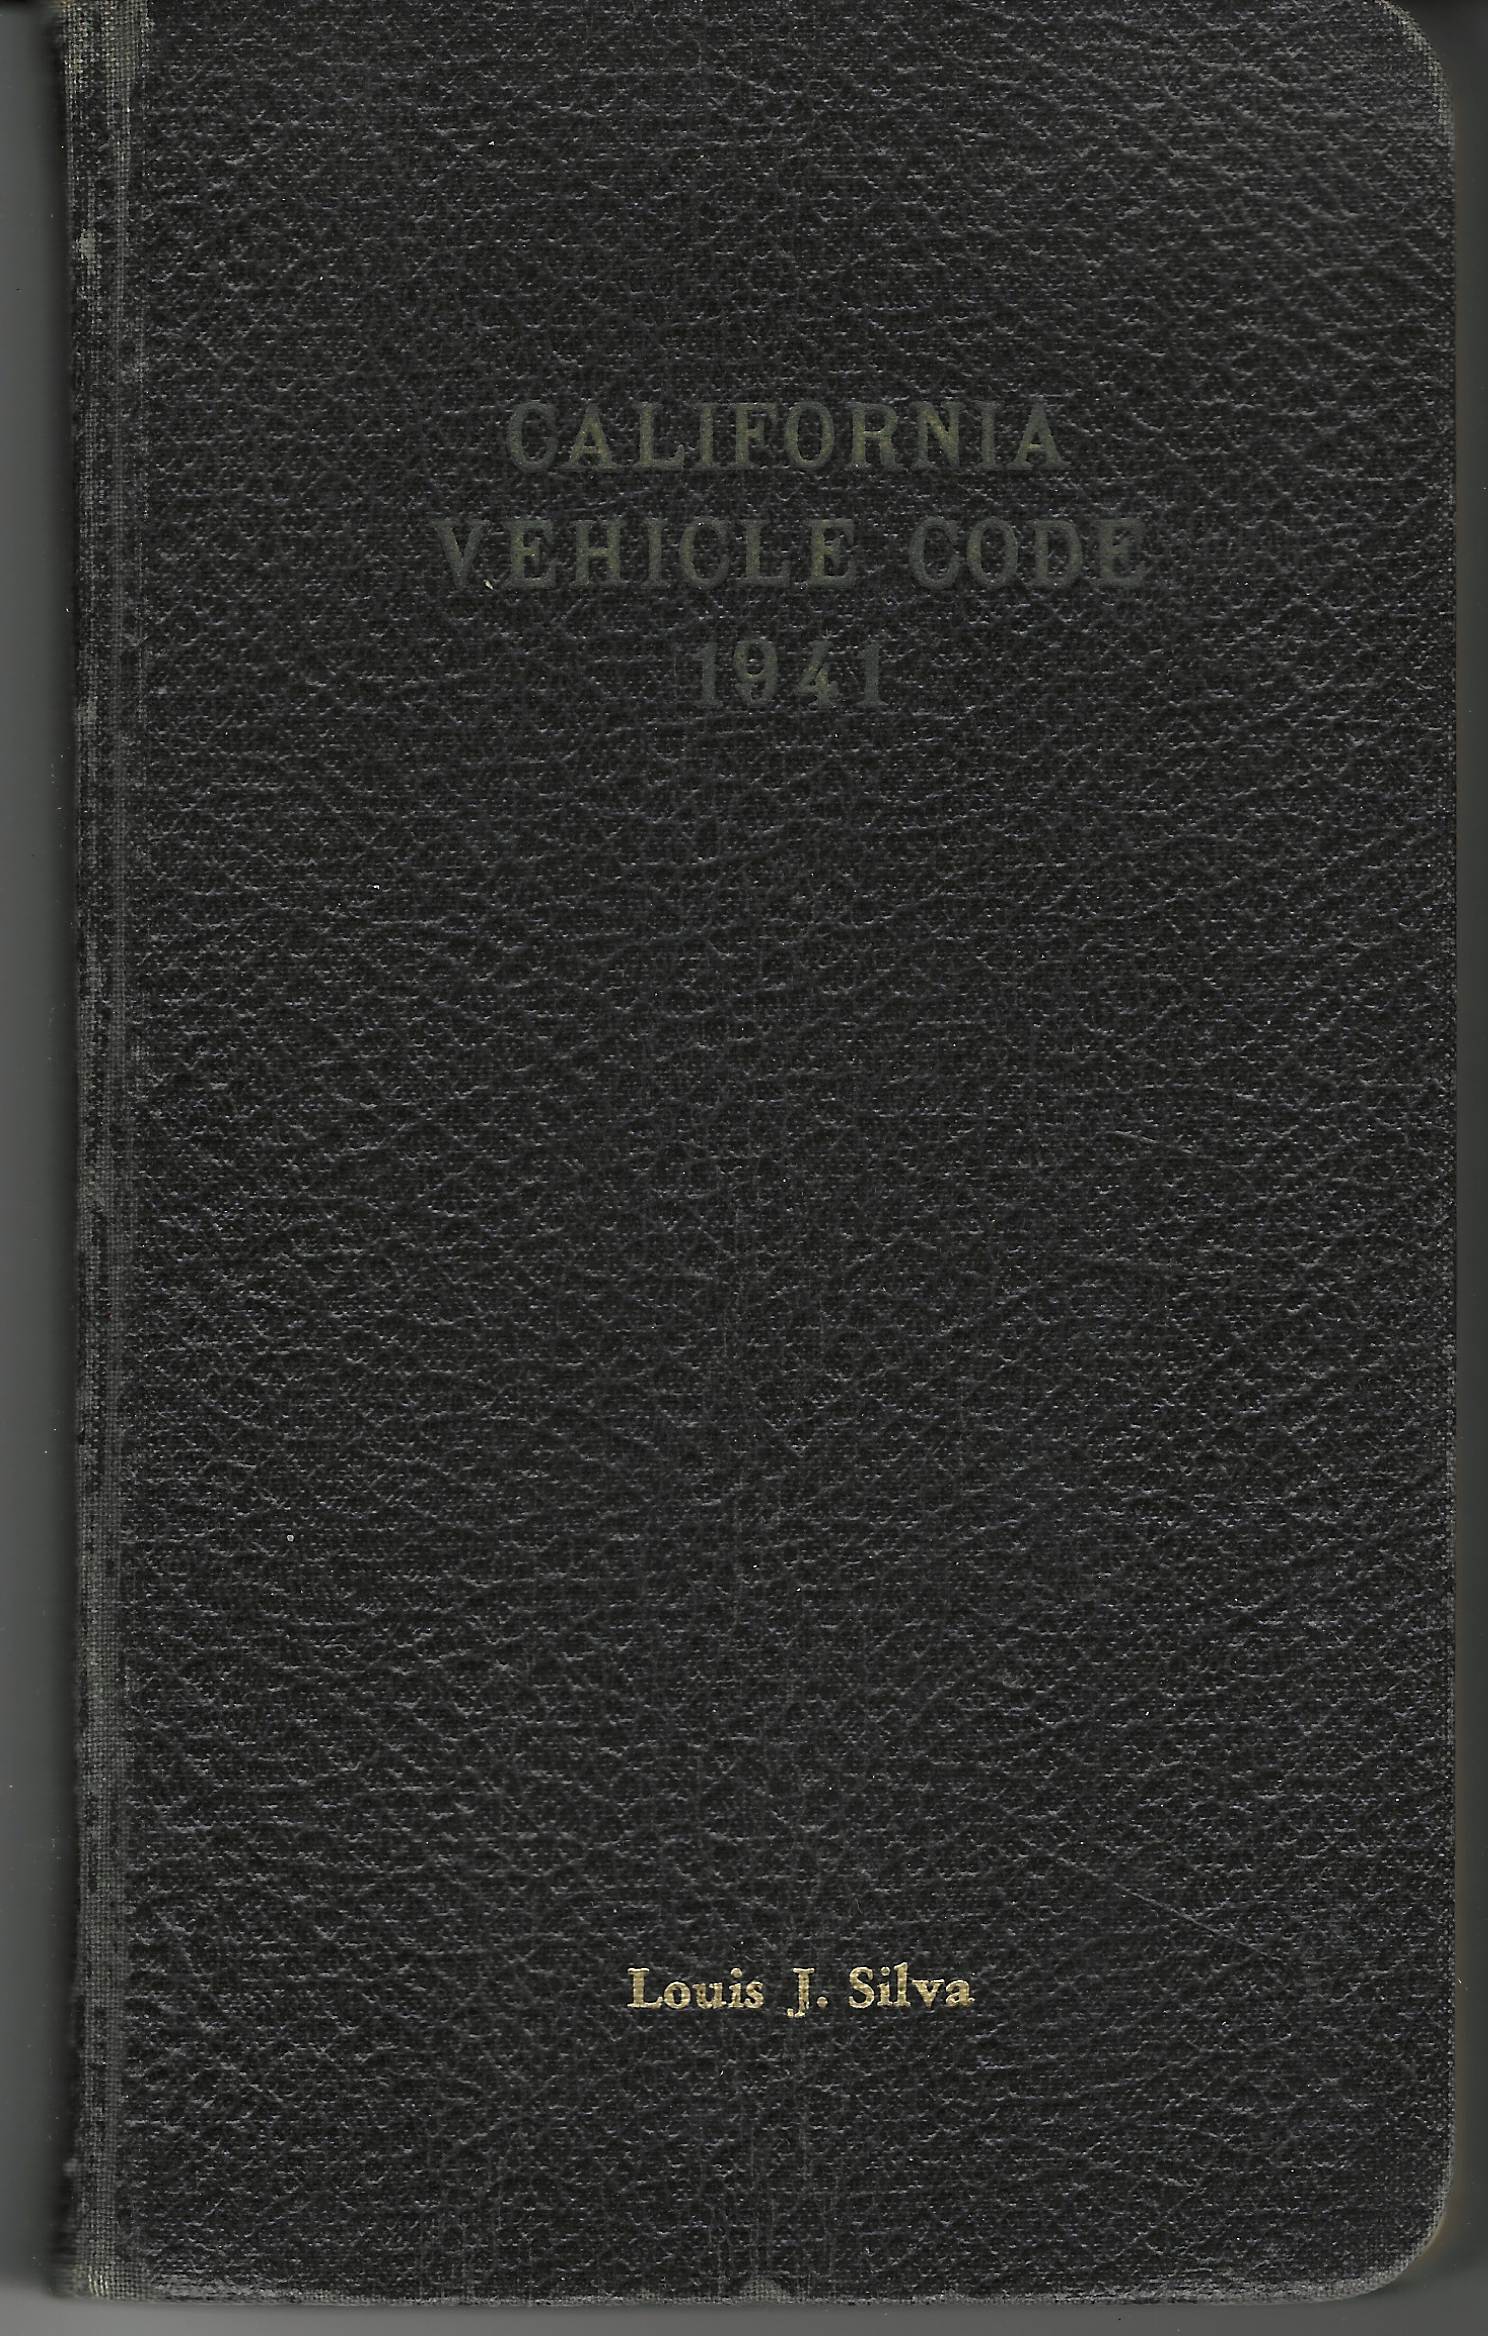 1941 Vehicle Code